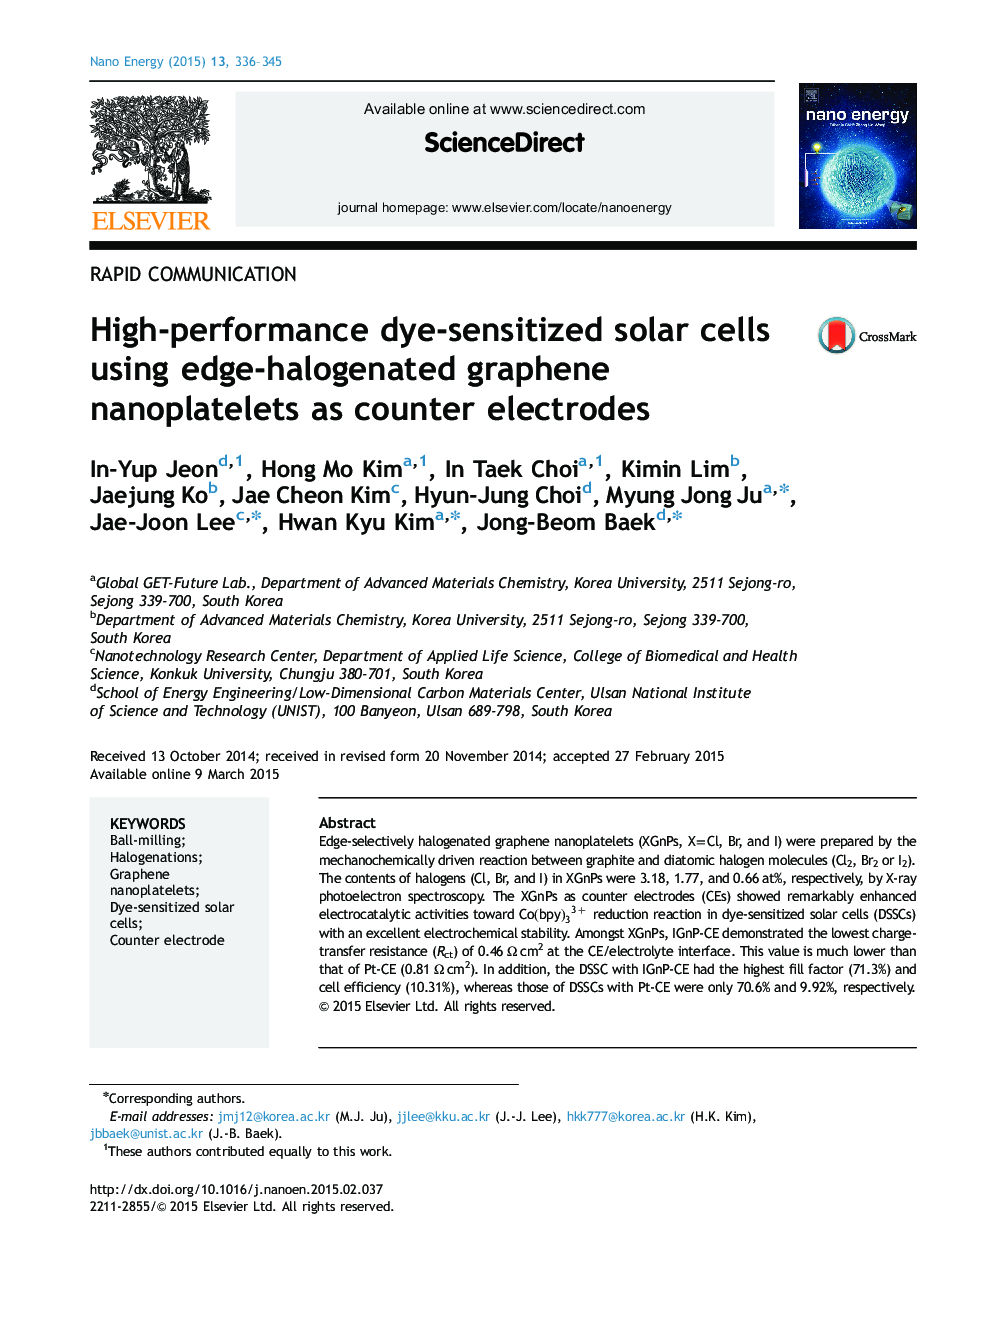 High-performance dye-sensitized solar cells using edge-halogenated graphene nanoplatelets as counter electrodes